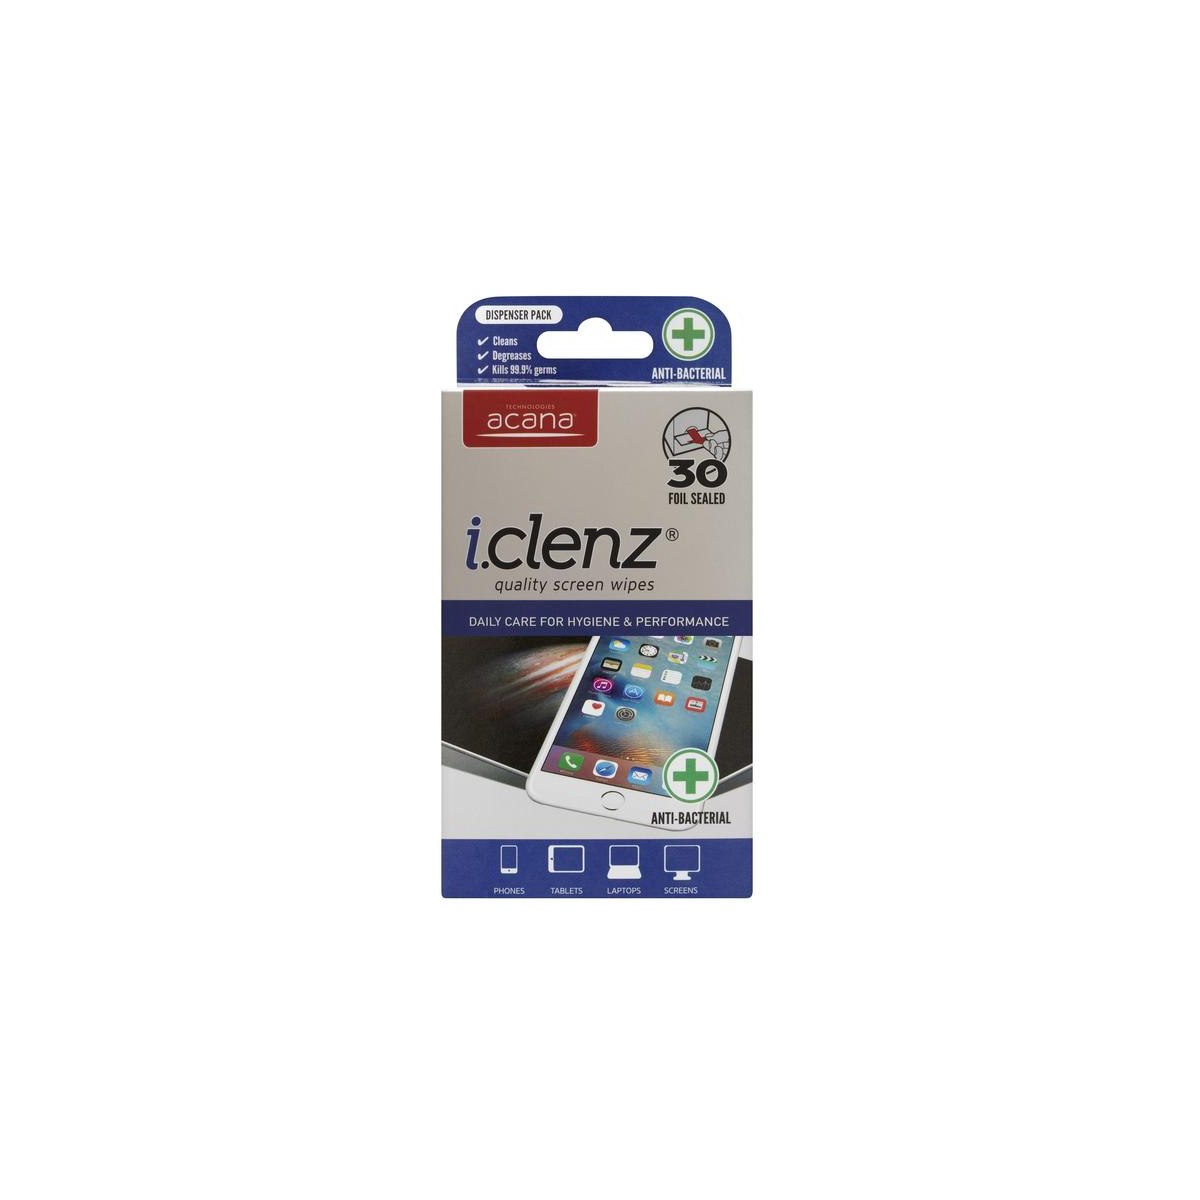 Acana i.clenz Quality Screen Wipes 30 Pack